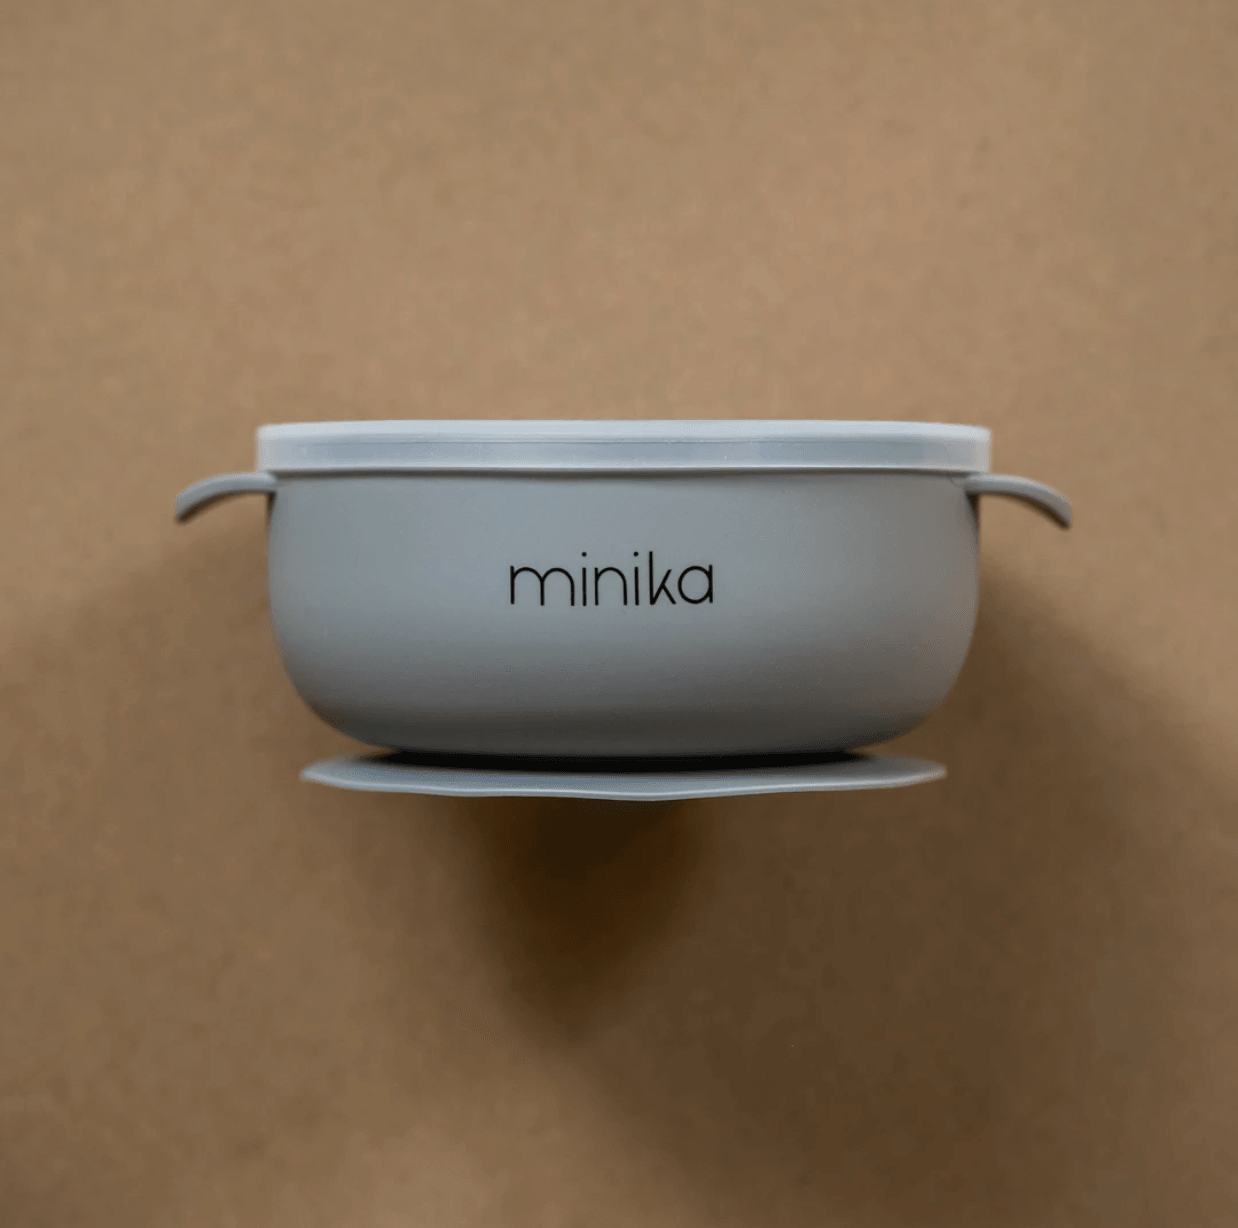 minika stone coloured silicone bowl